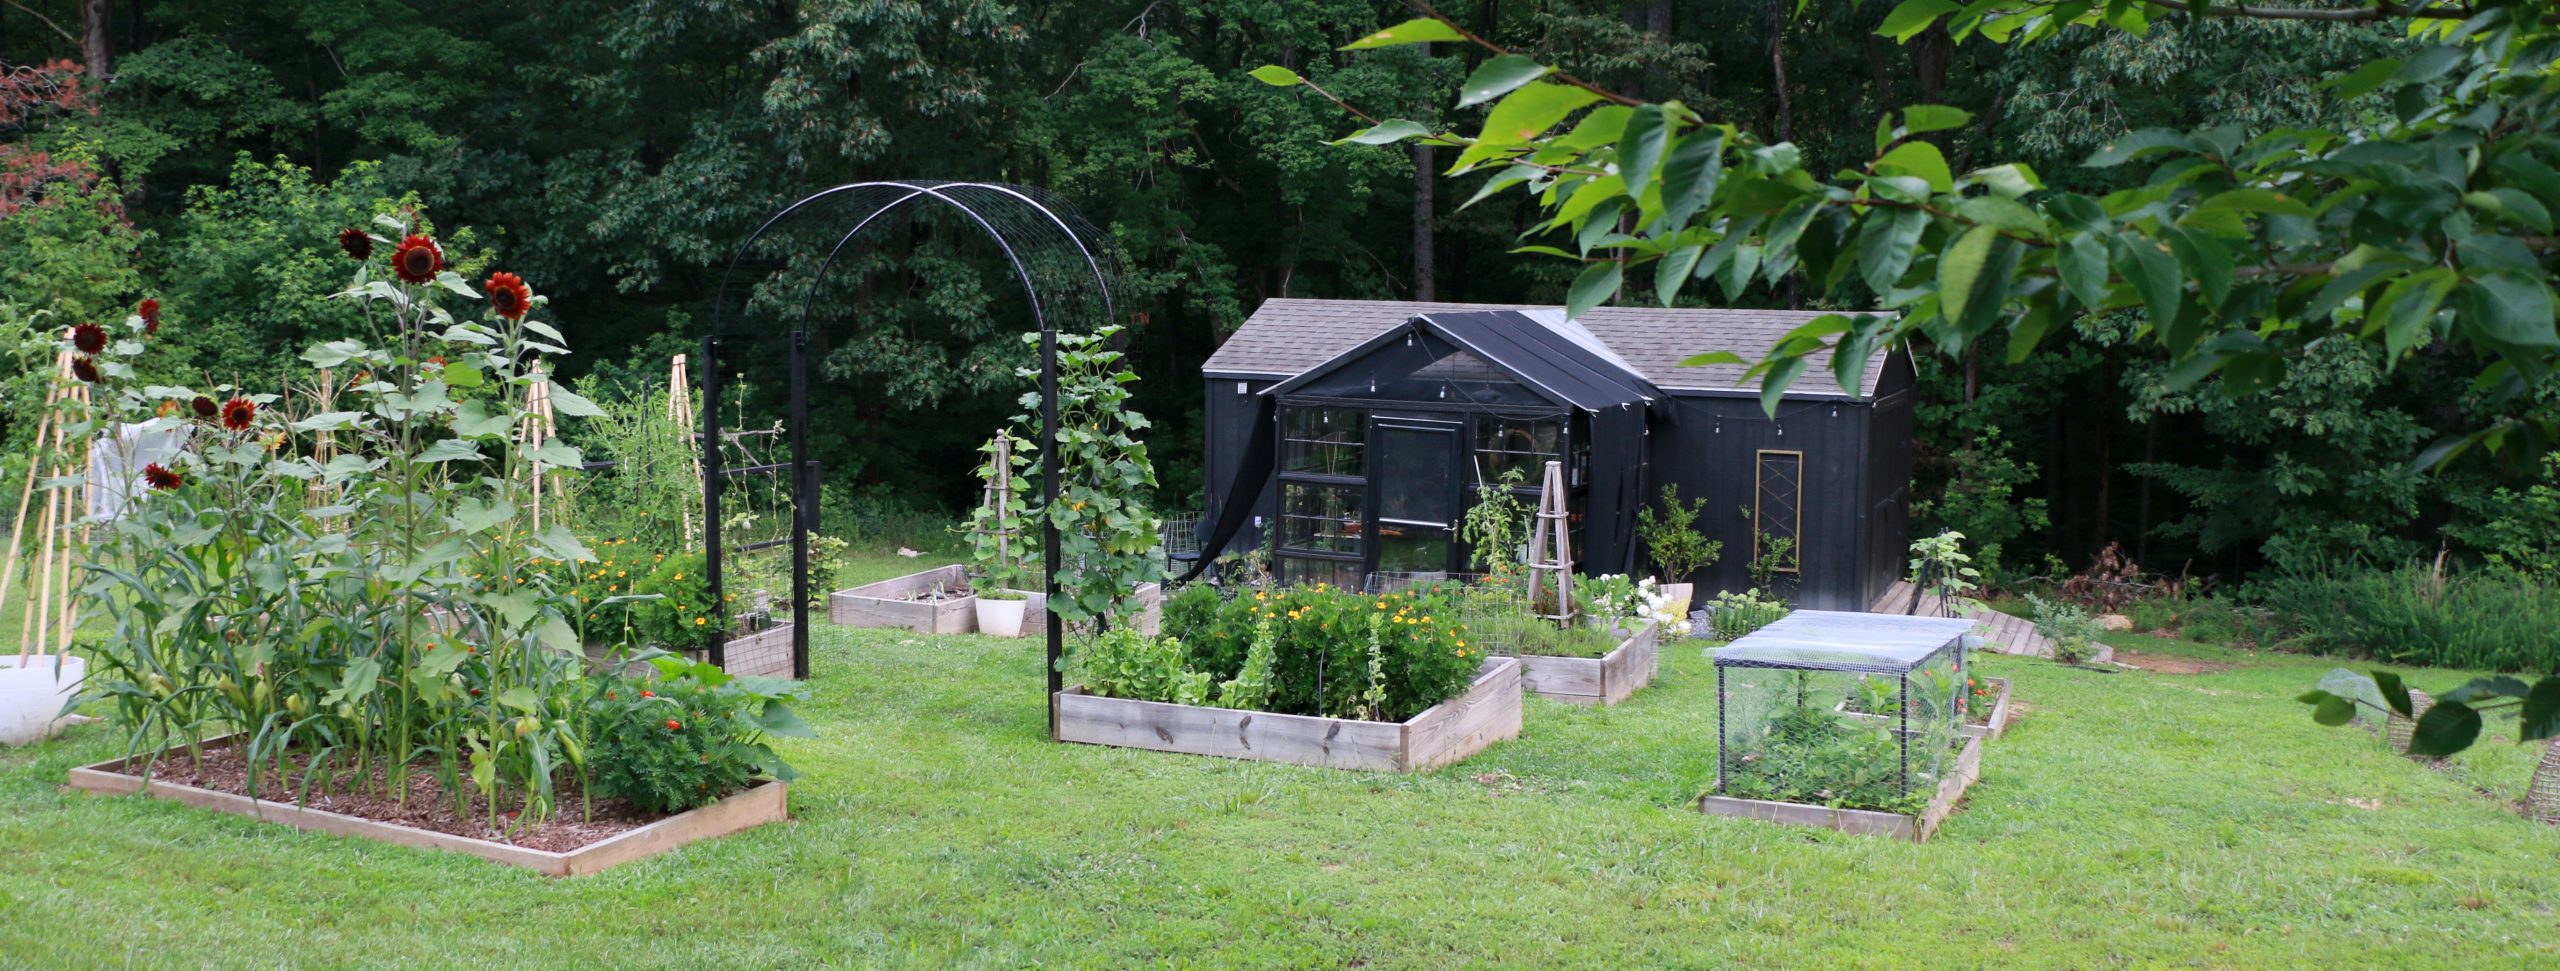 16 Backyard Vegetable Garden Ideas for Beginners